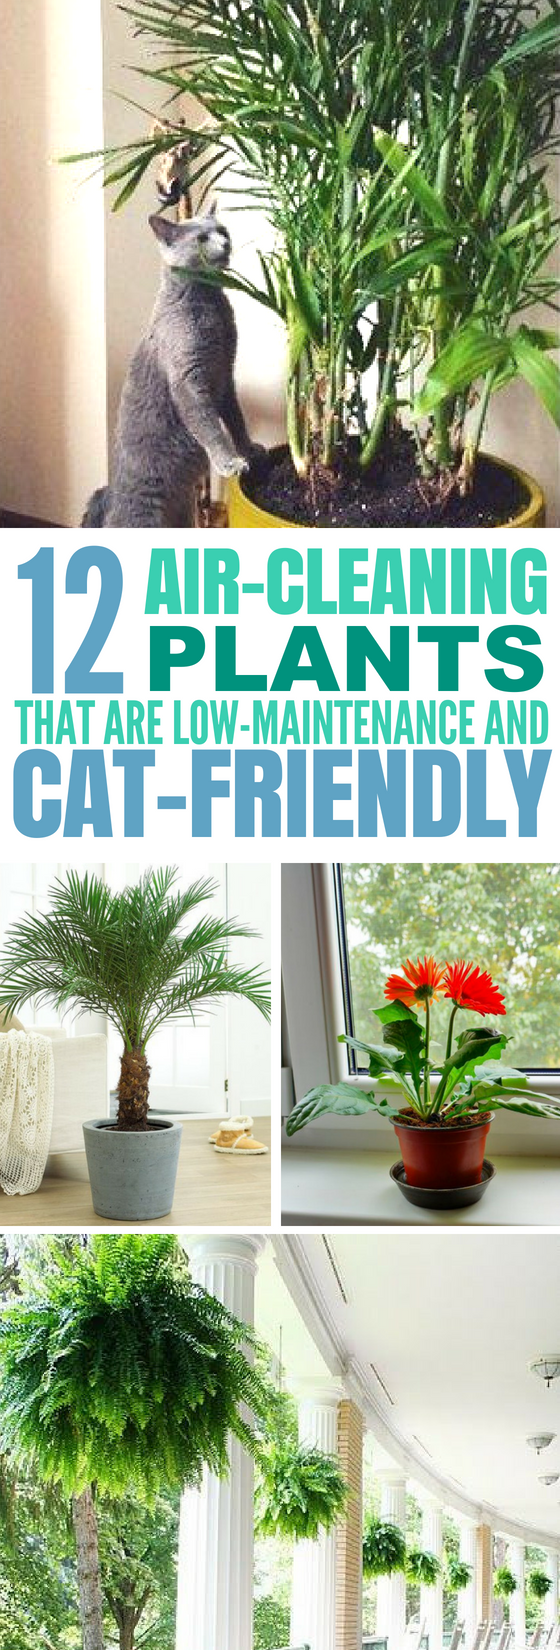 16 plants Decor cats ideas